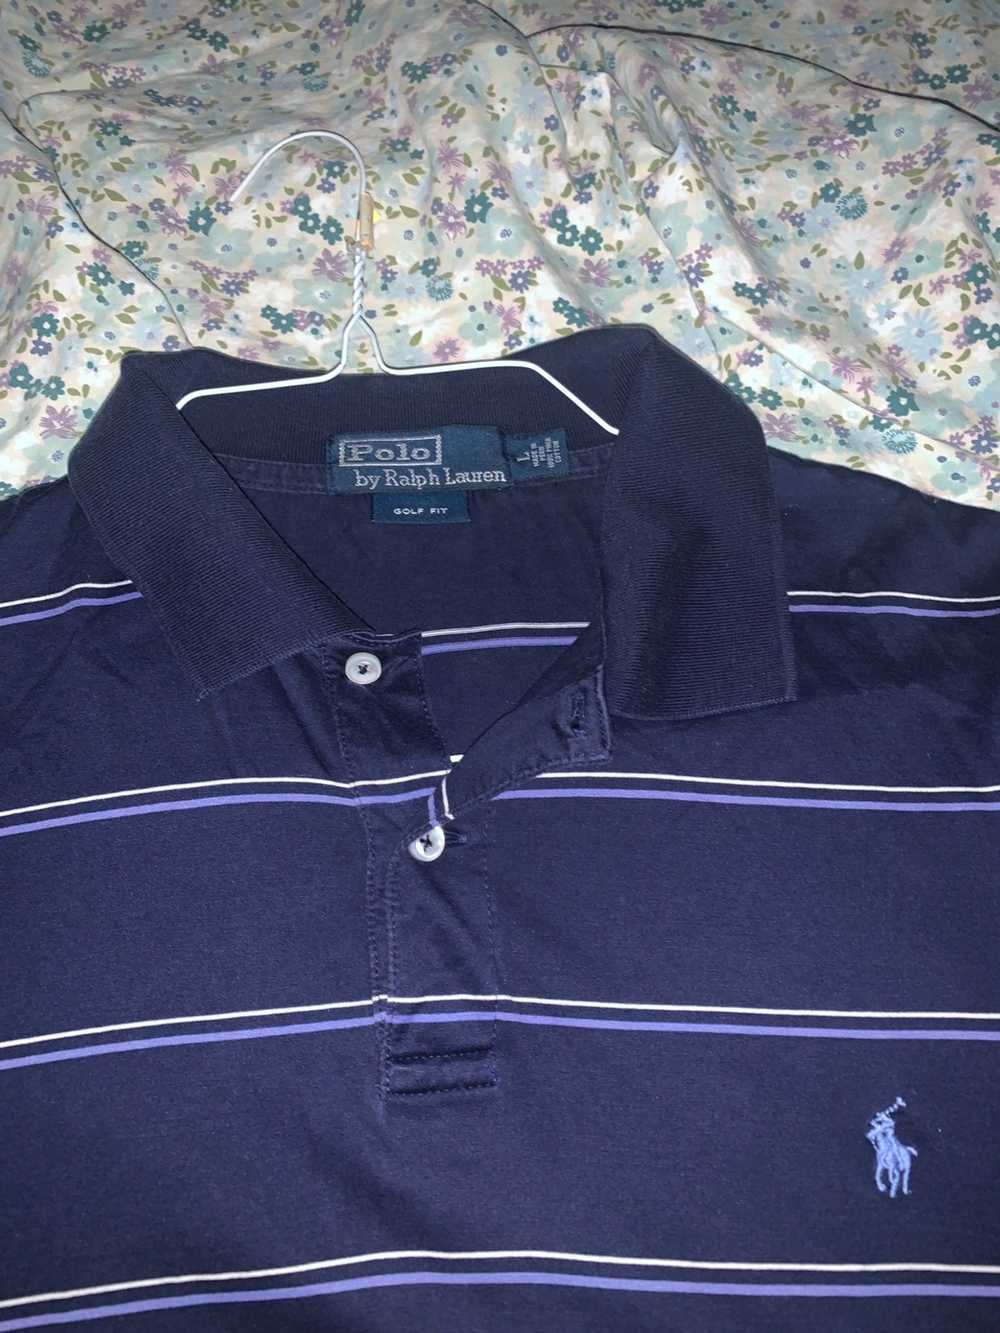 Polo Ralph Lauren Men’s Polo Collared T-Shirt - image 2